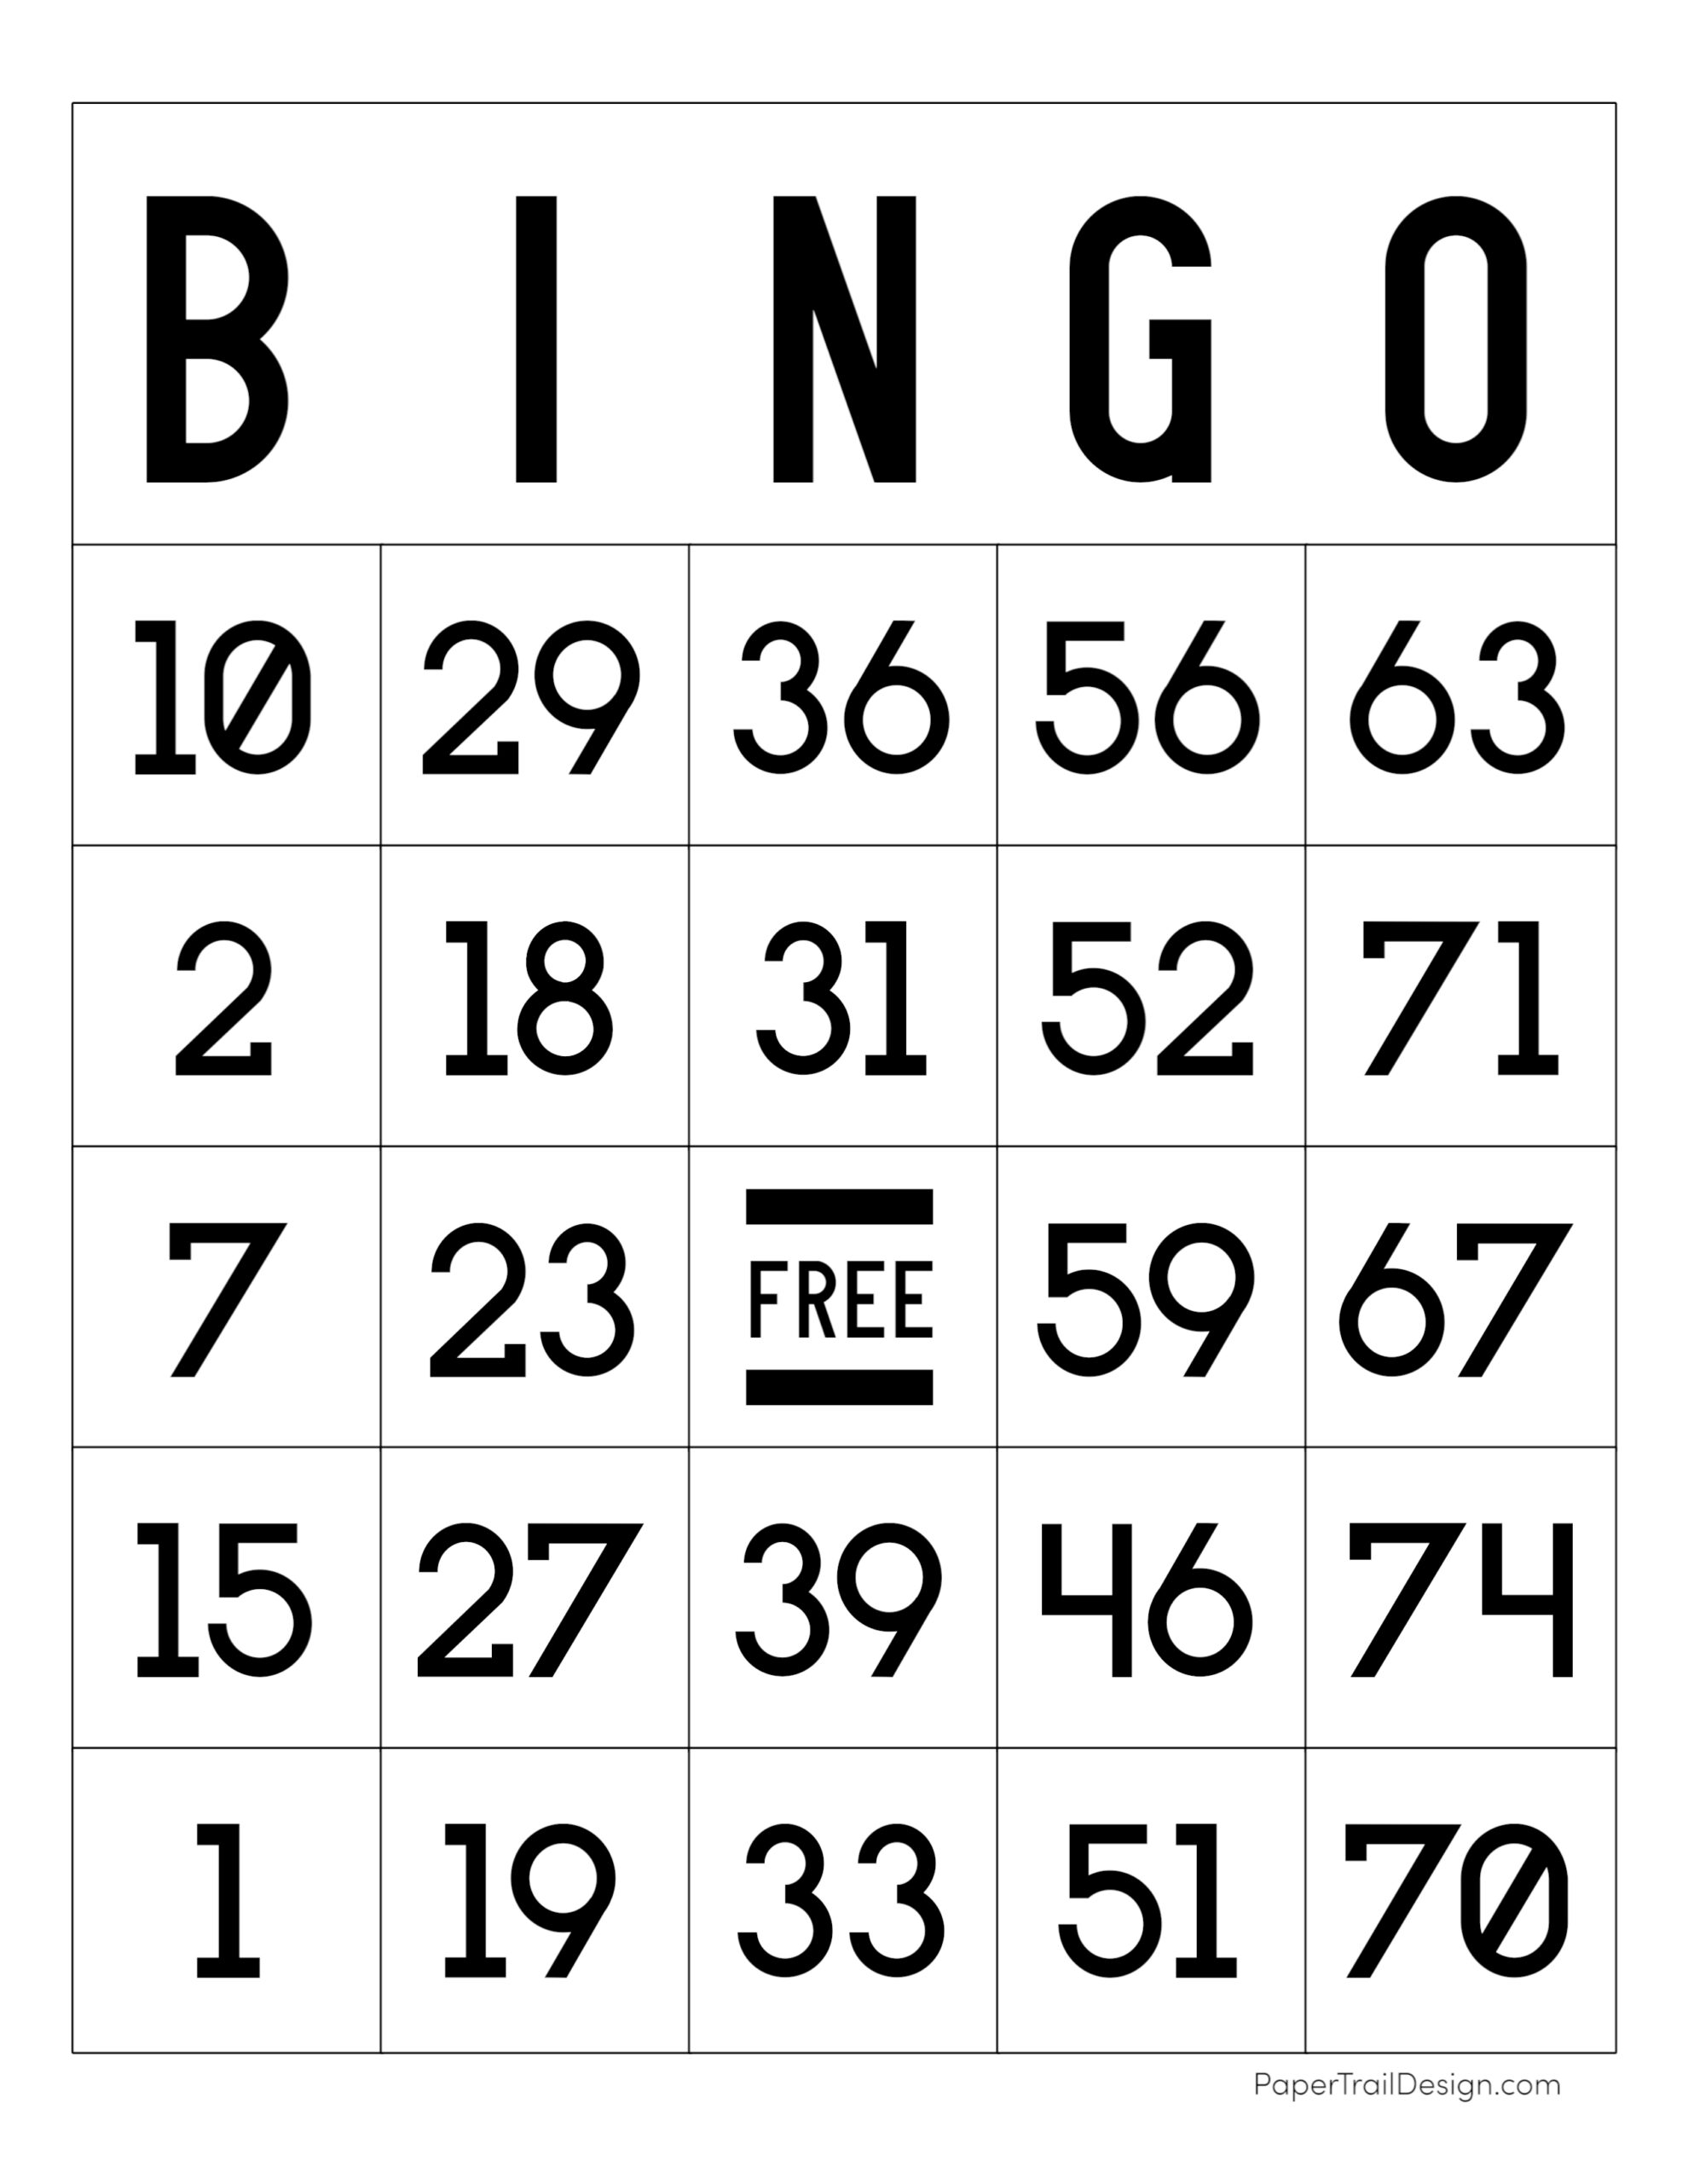 bingo-board-printable-free-printable-templates